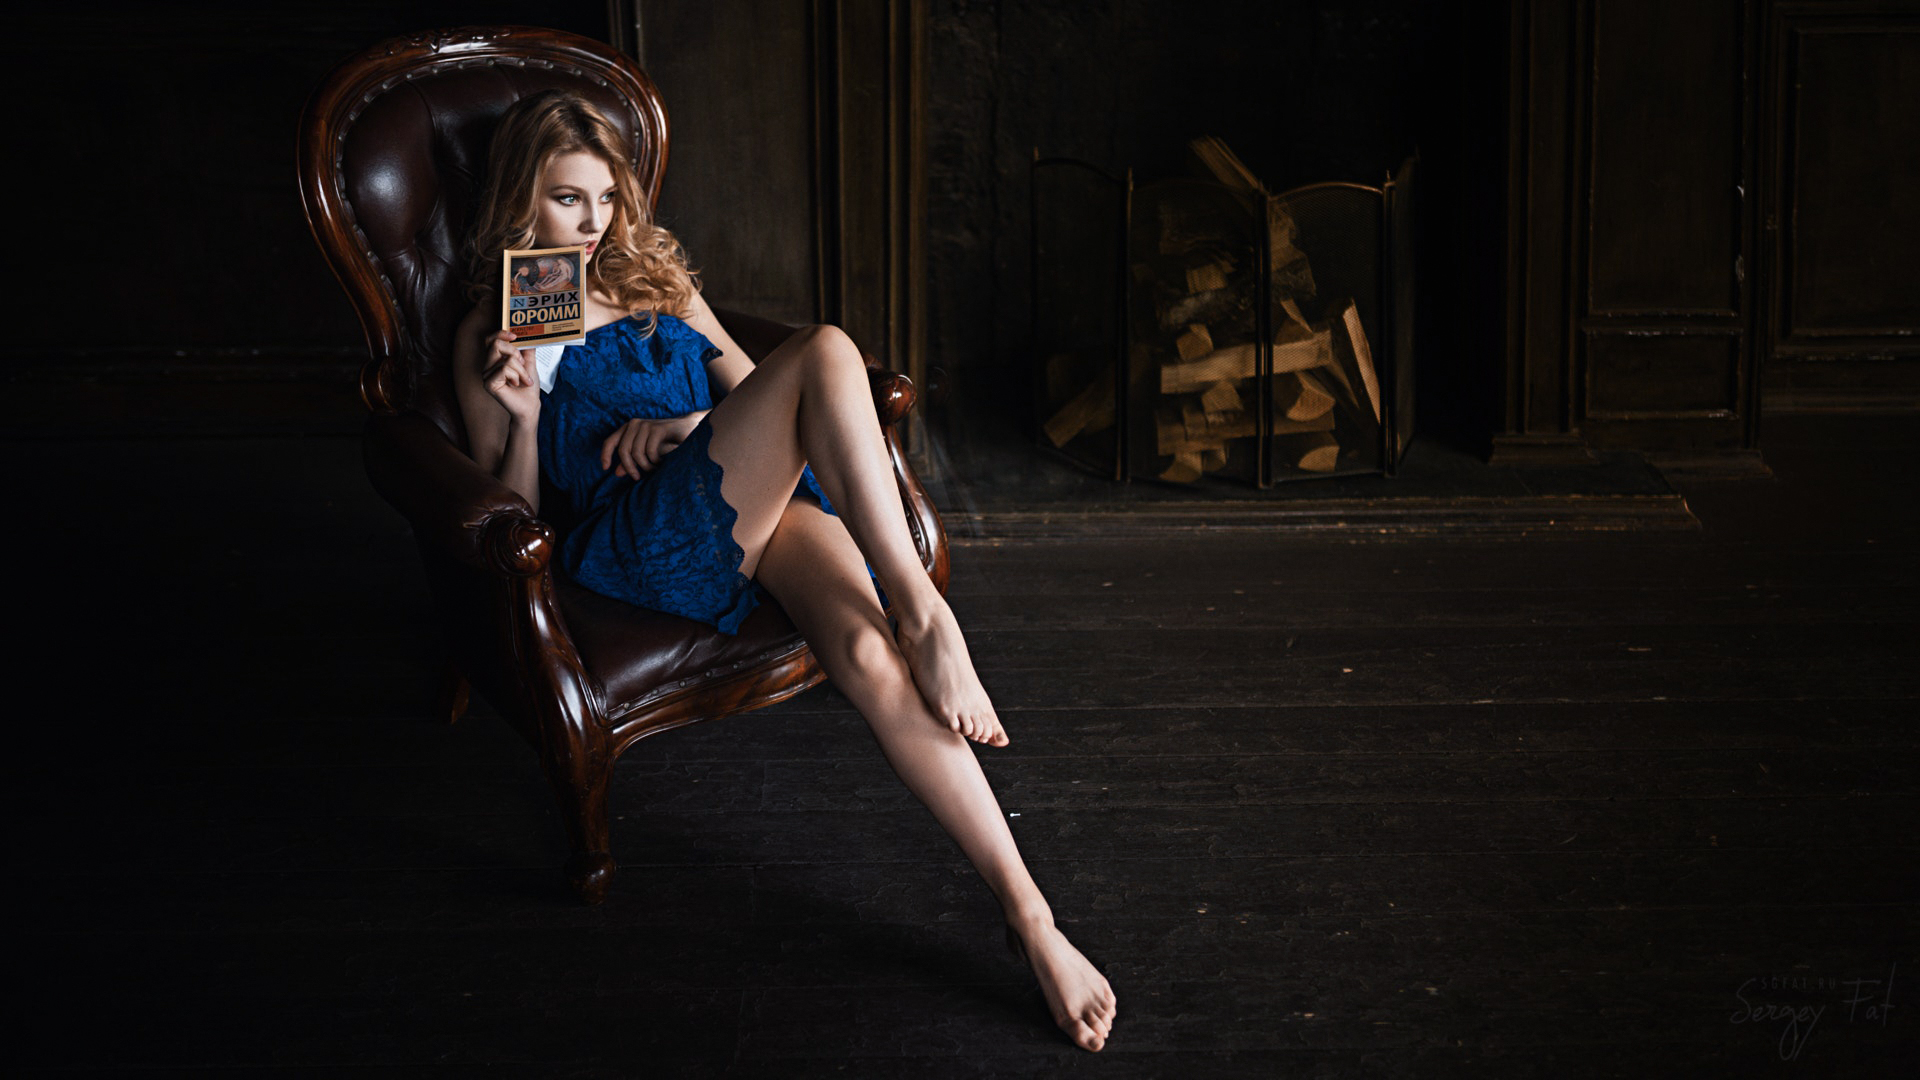 Sergey Fat Women Alice Tarasenko Blonde Long Hair Looking Away Dress Blue Clothing Legs Chair Barefo 1920x1080